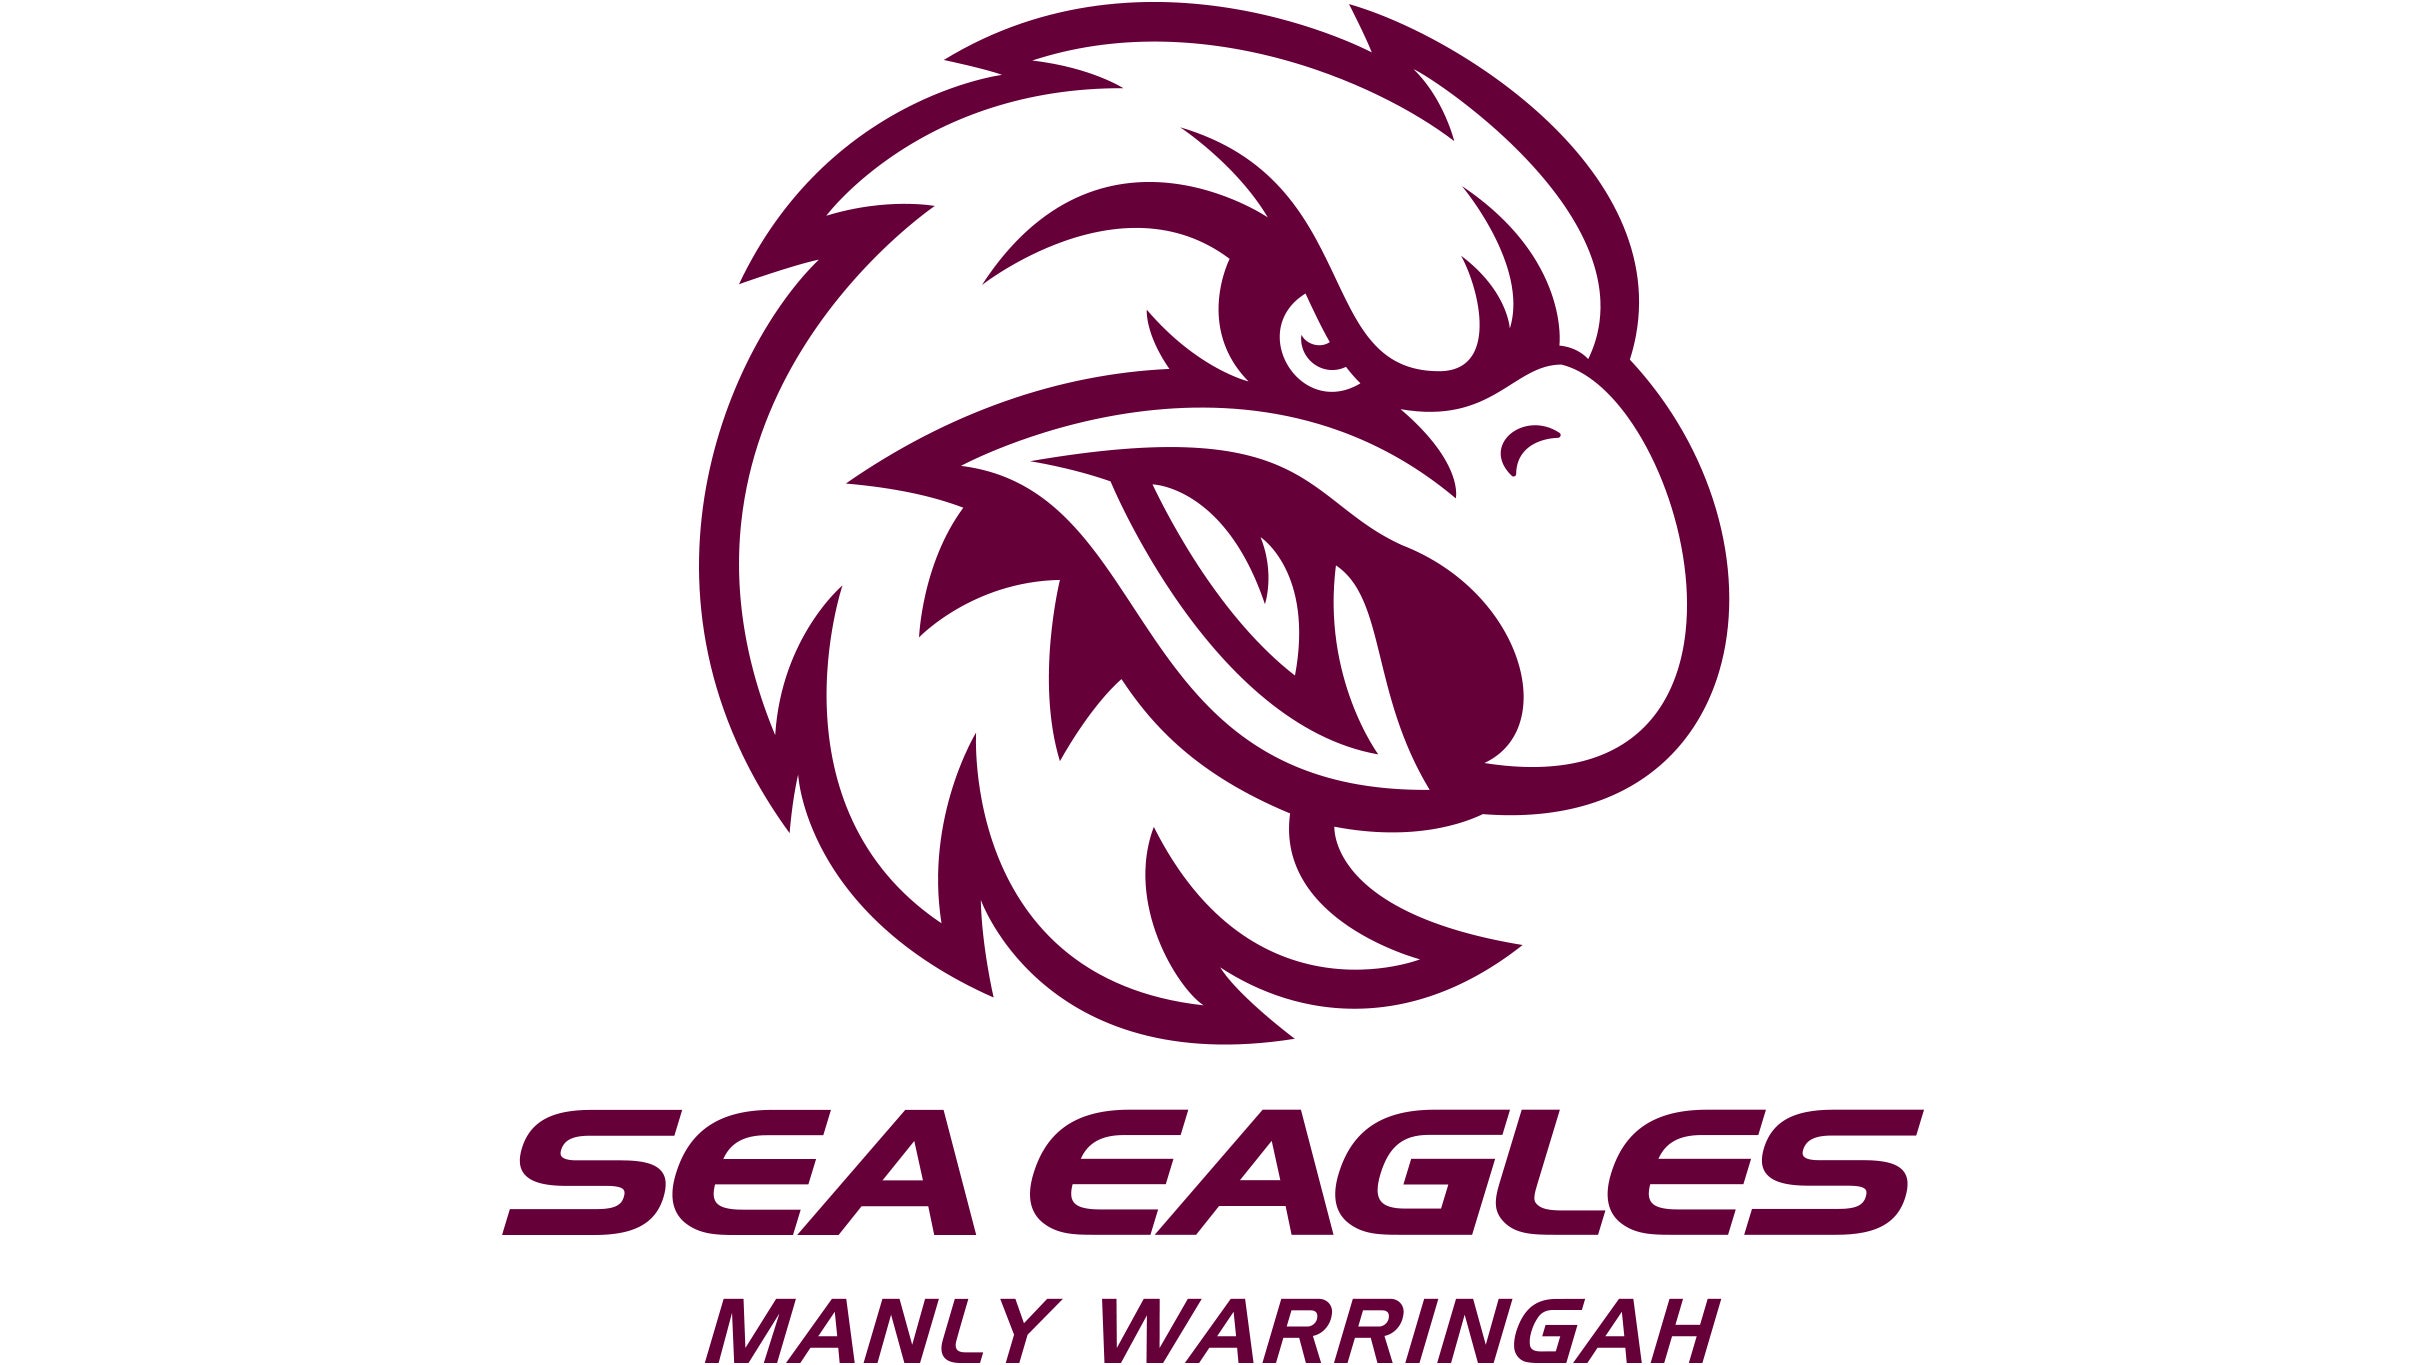 Manly Warringah Sea Eagles v Titans in Brookvale promo photo for Sea Eagles Members presale offer code